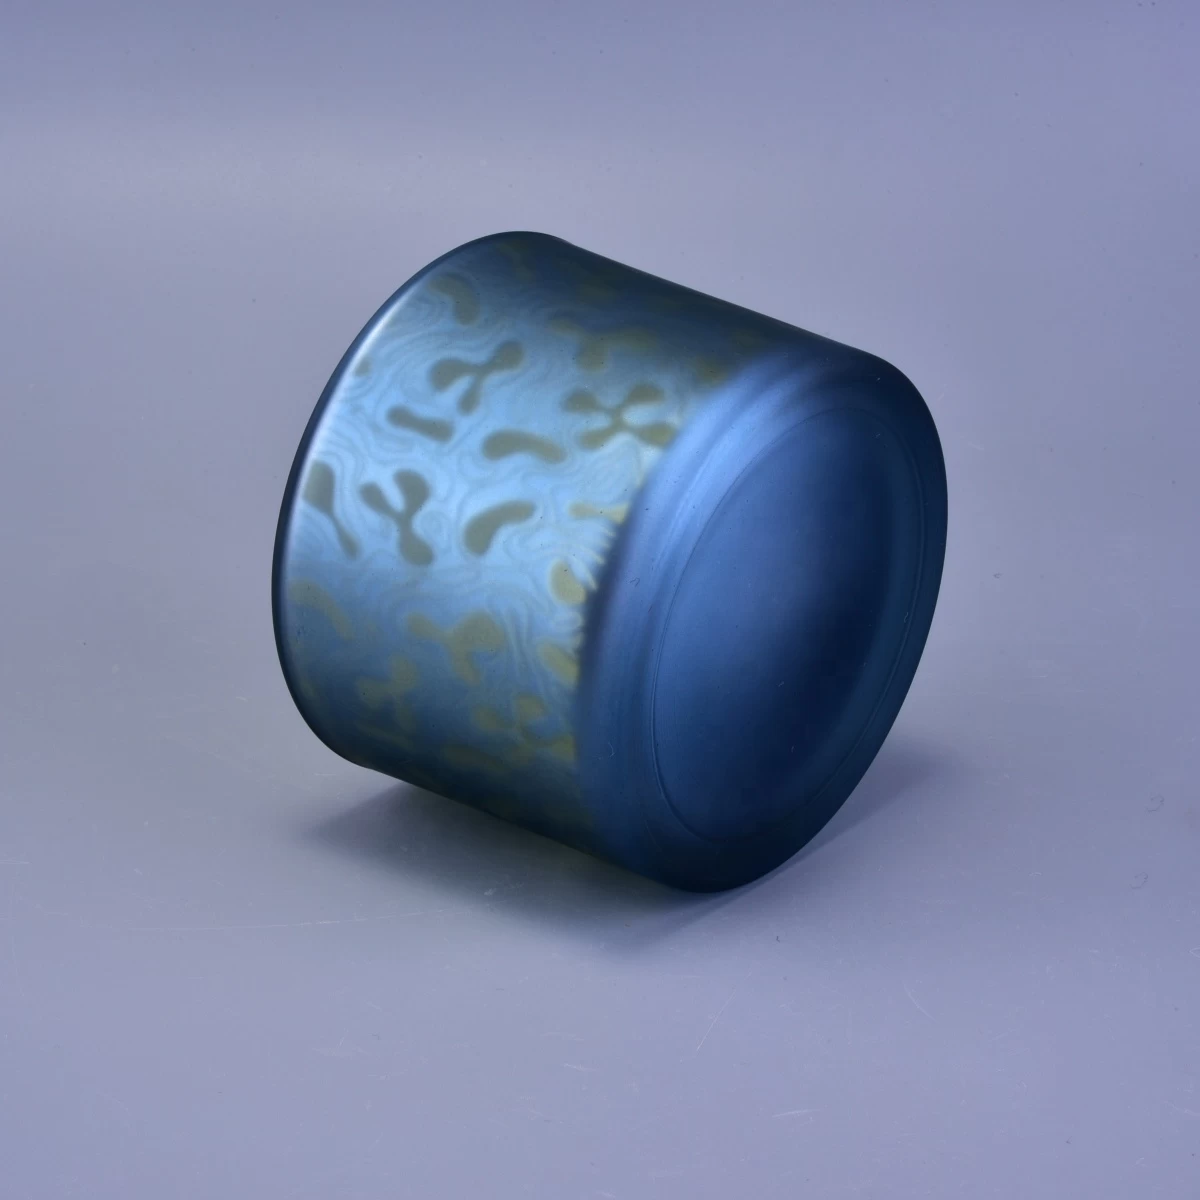 Sunny design matte blue luxury glass candle holder vessel